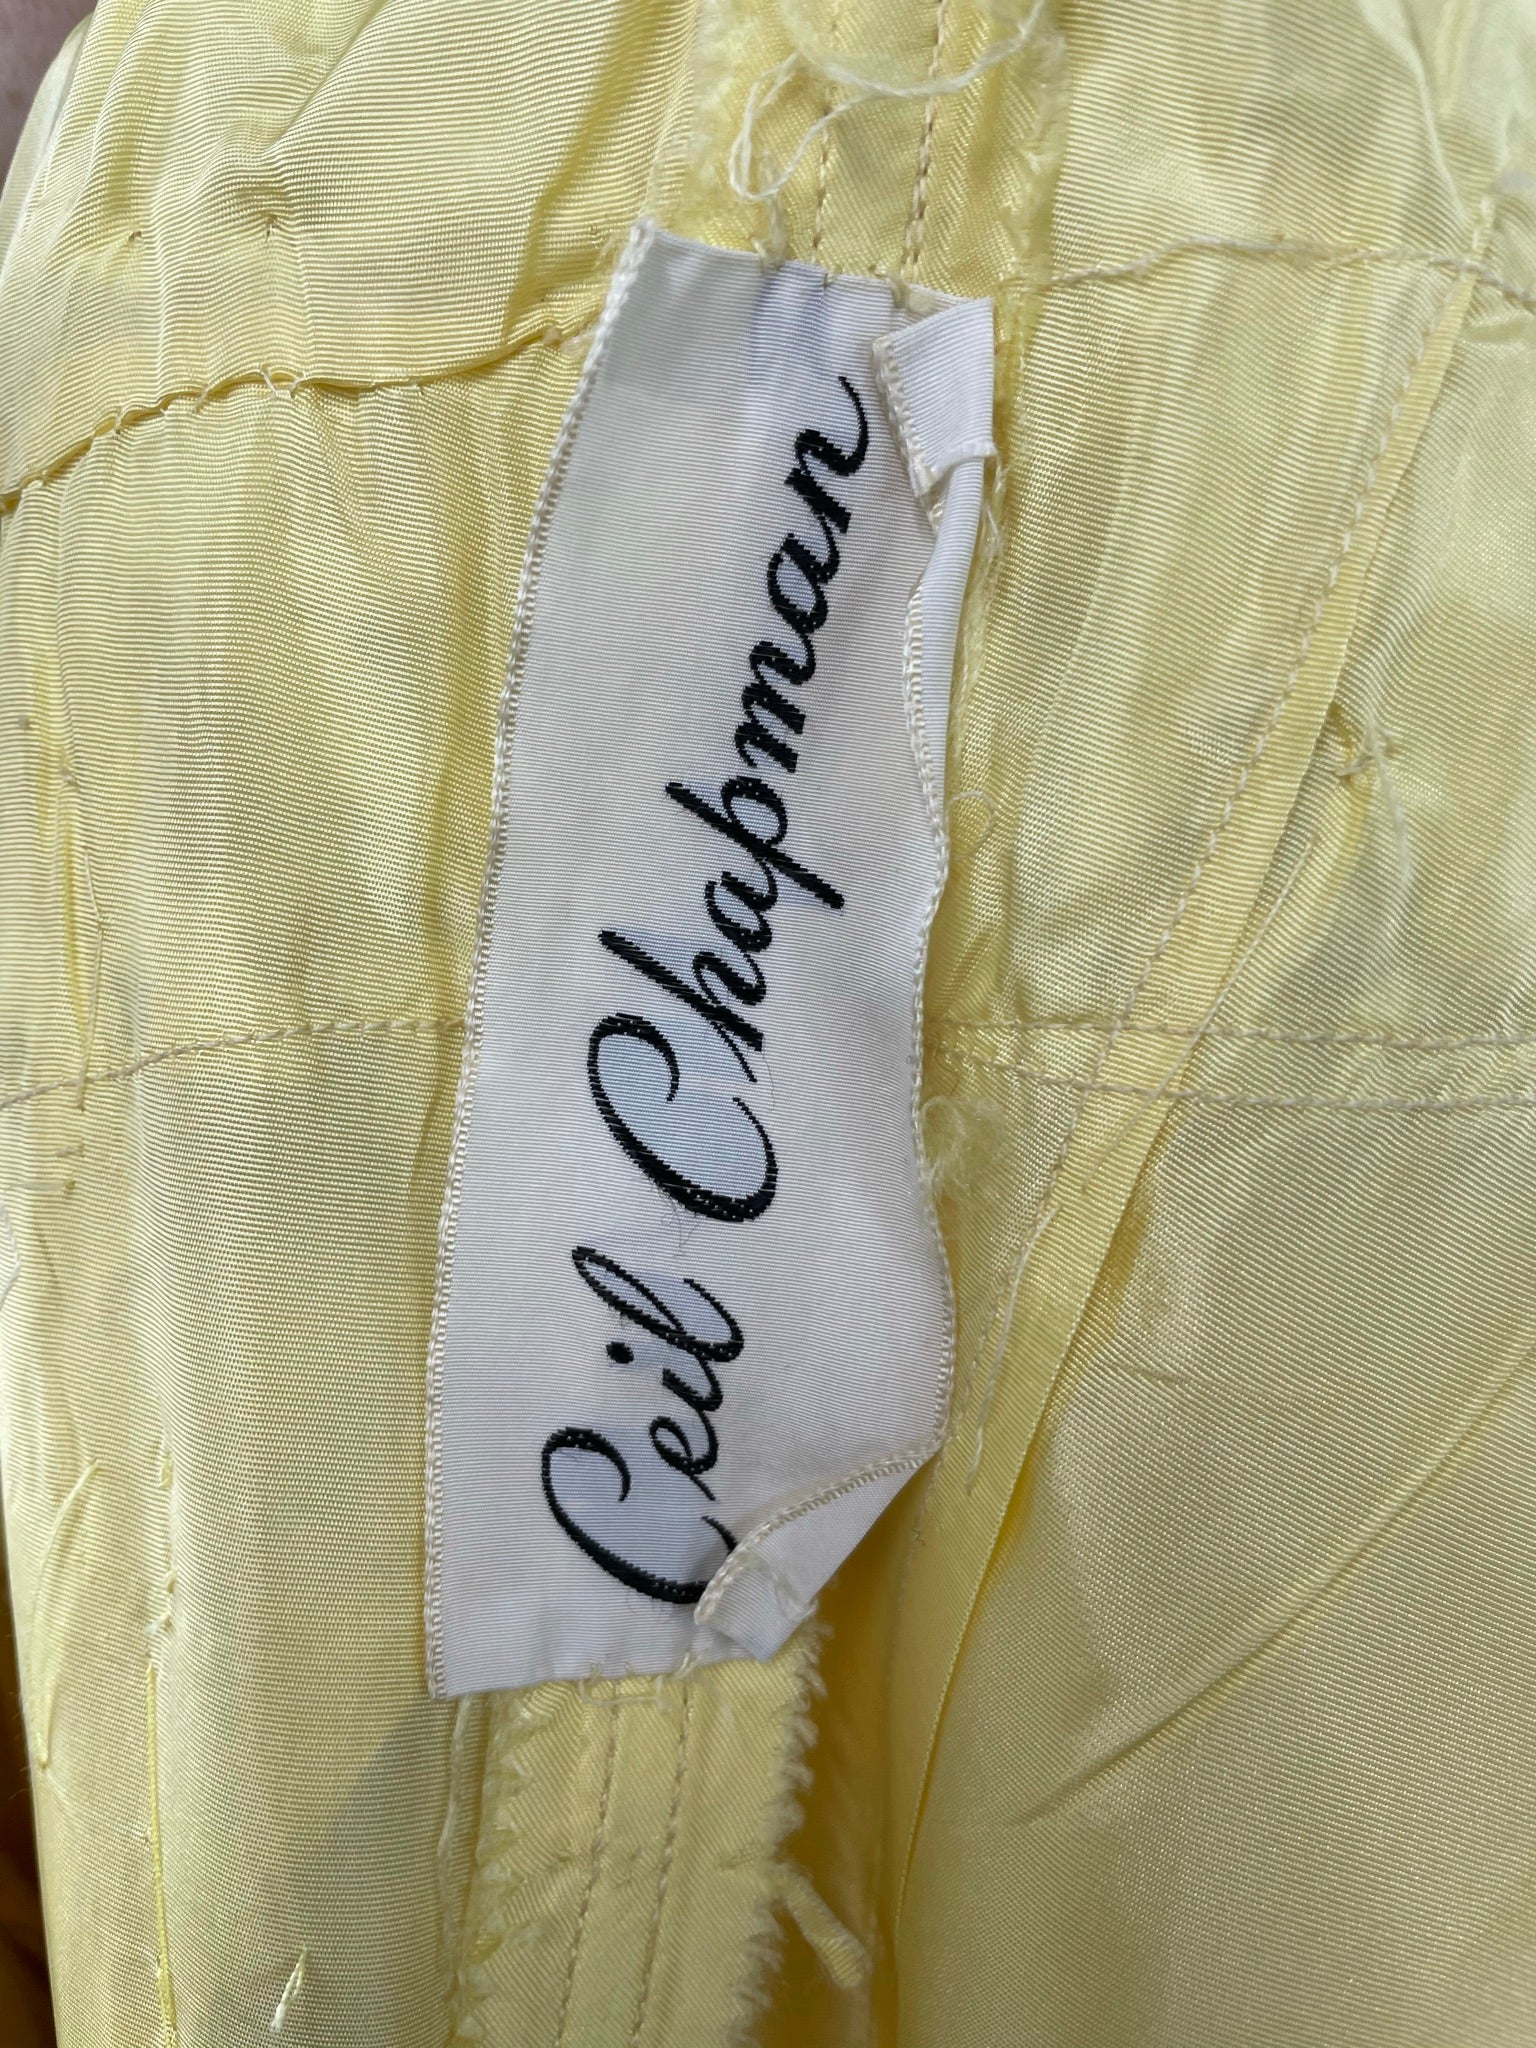 1950s Pale Yellow Ceil Chapman Party Dress Size M